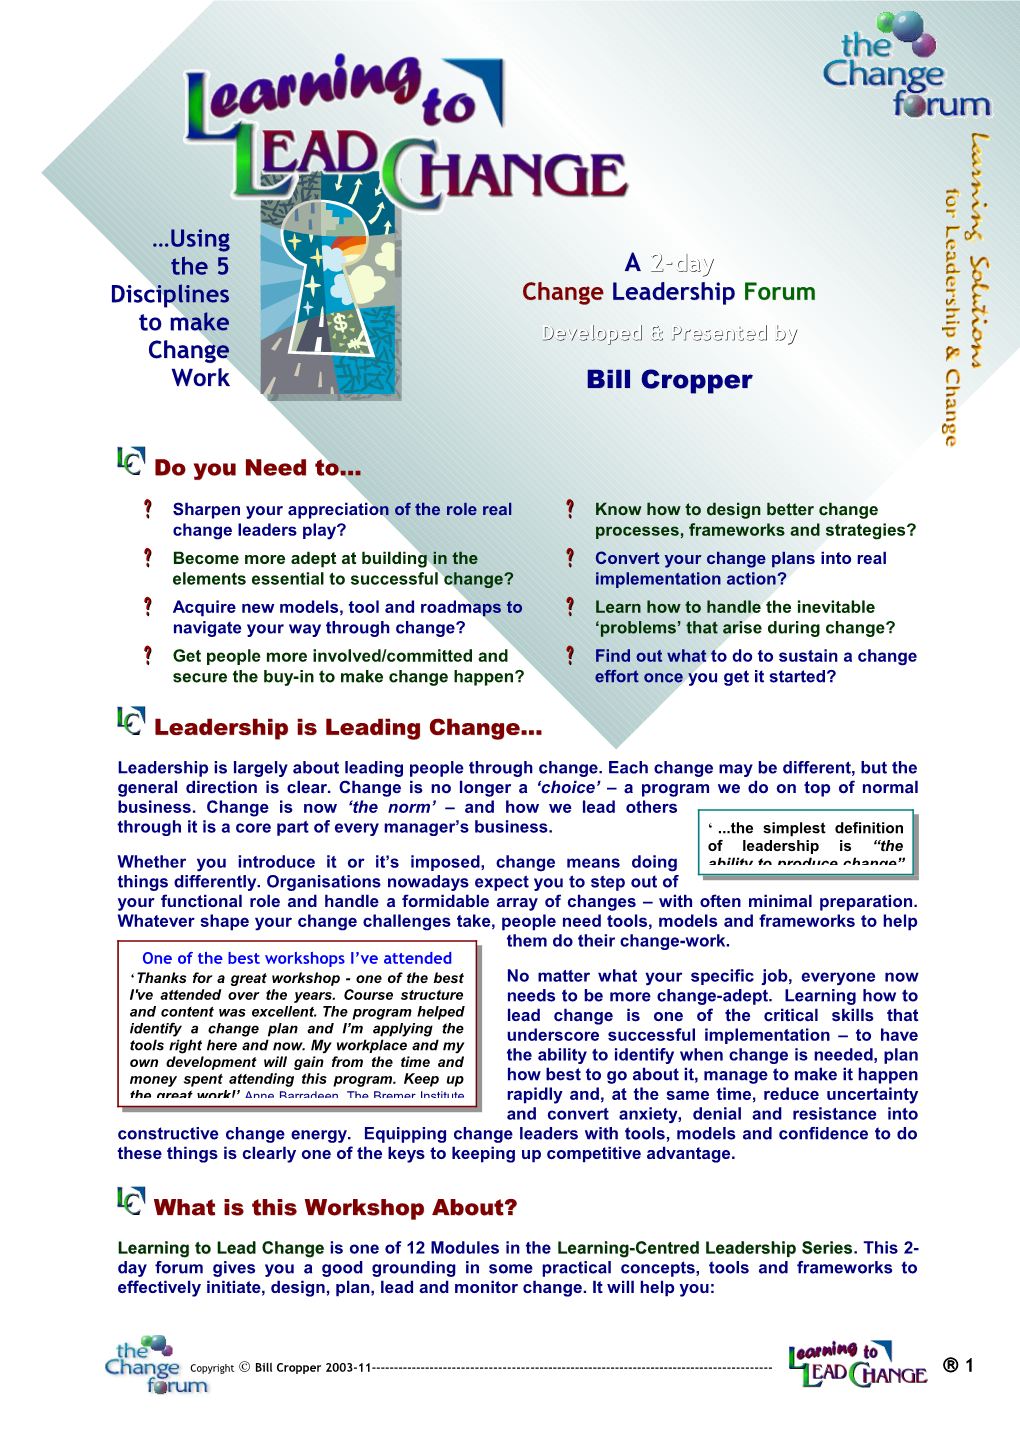 Brochure - Learning to Lead Change